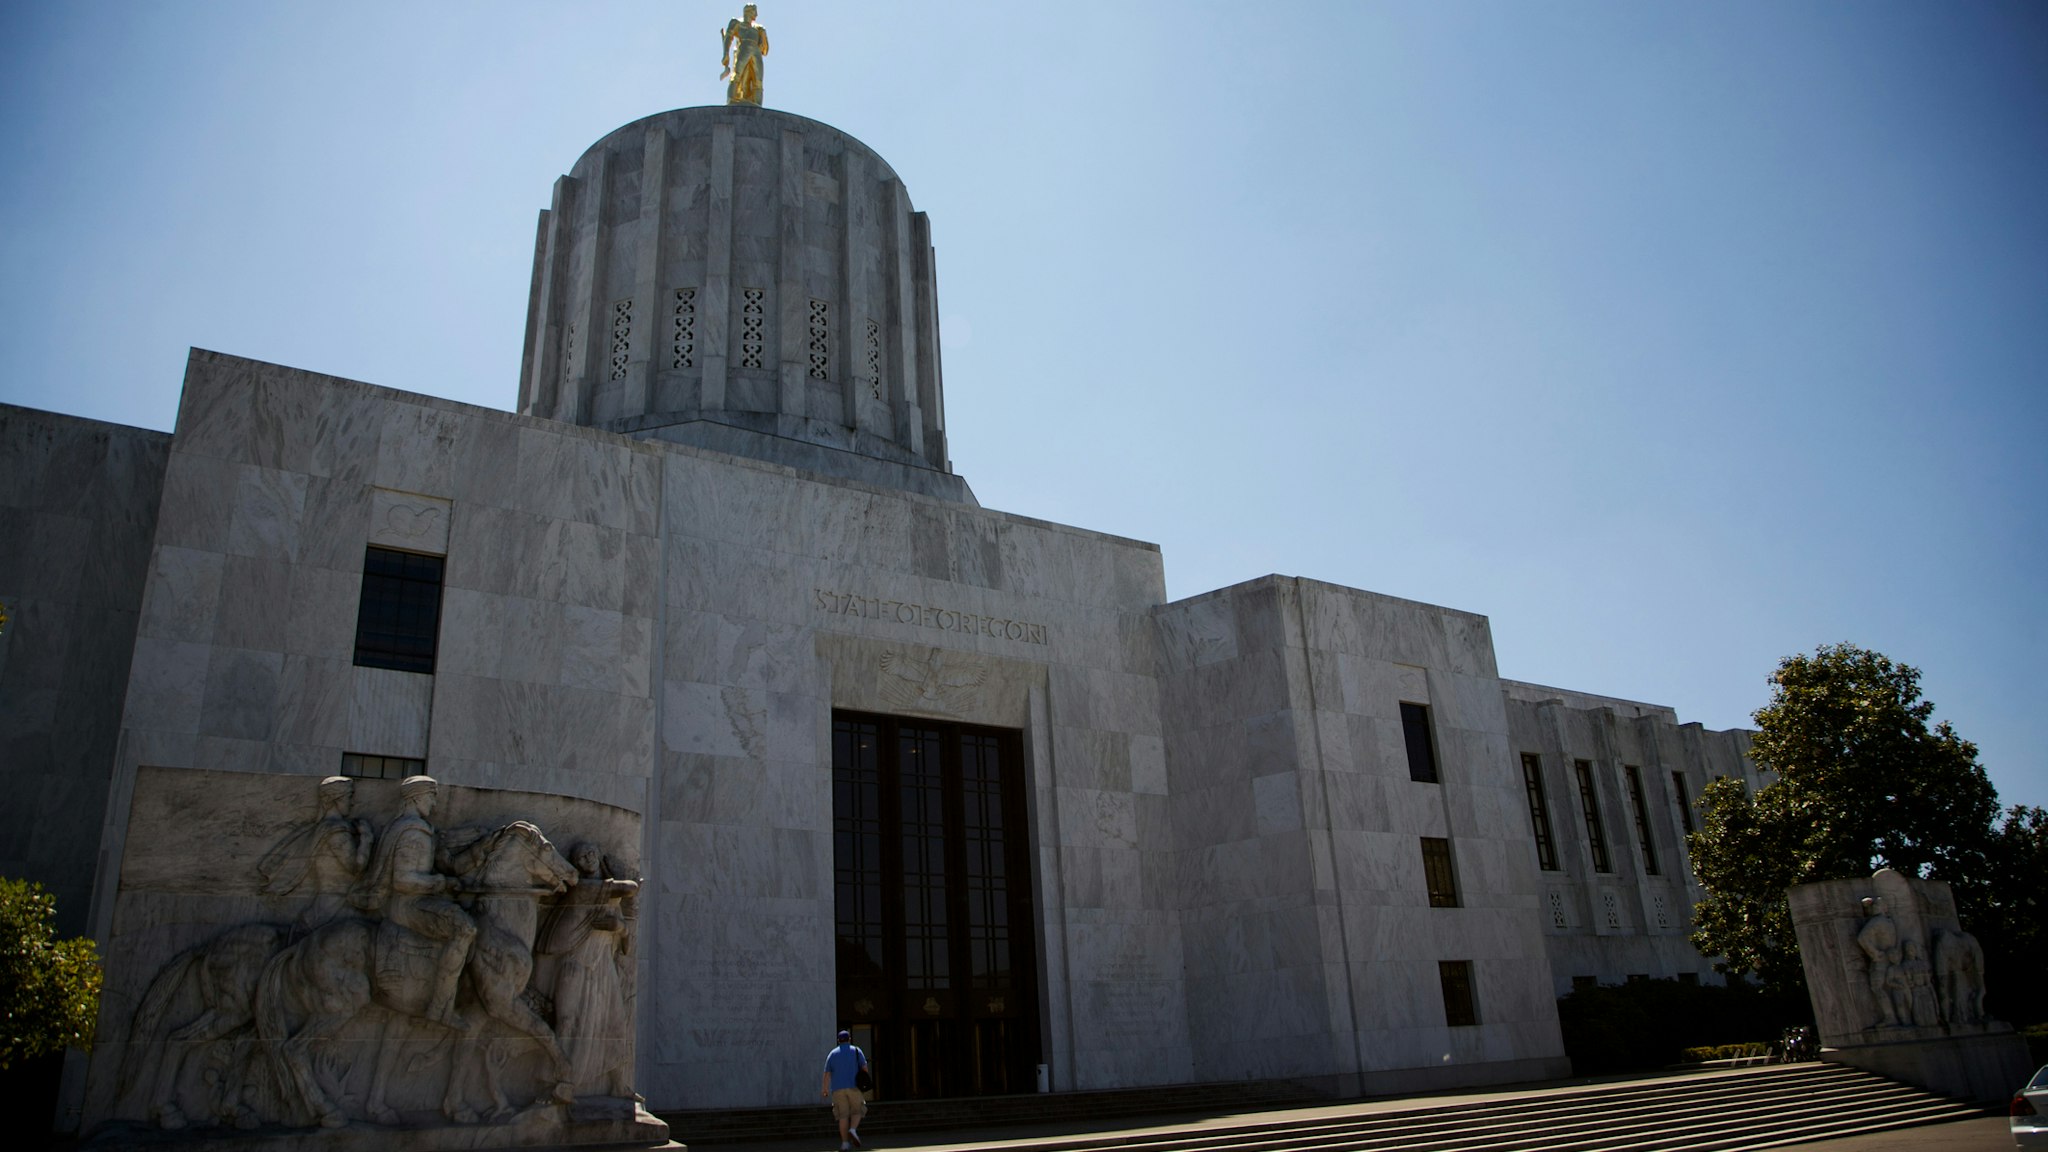 Oregon State Capitol